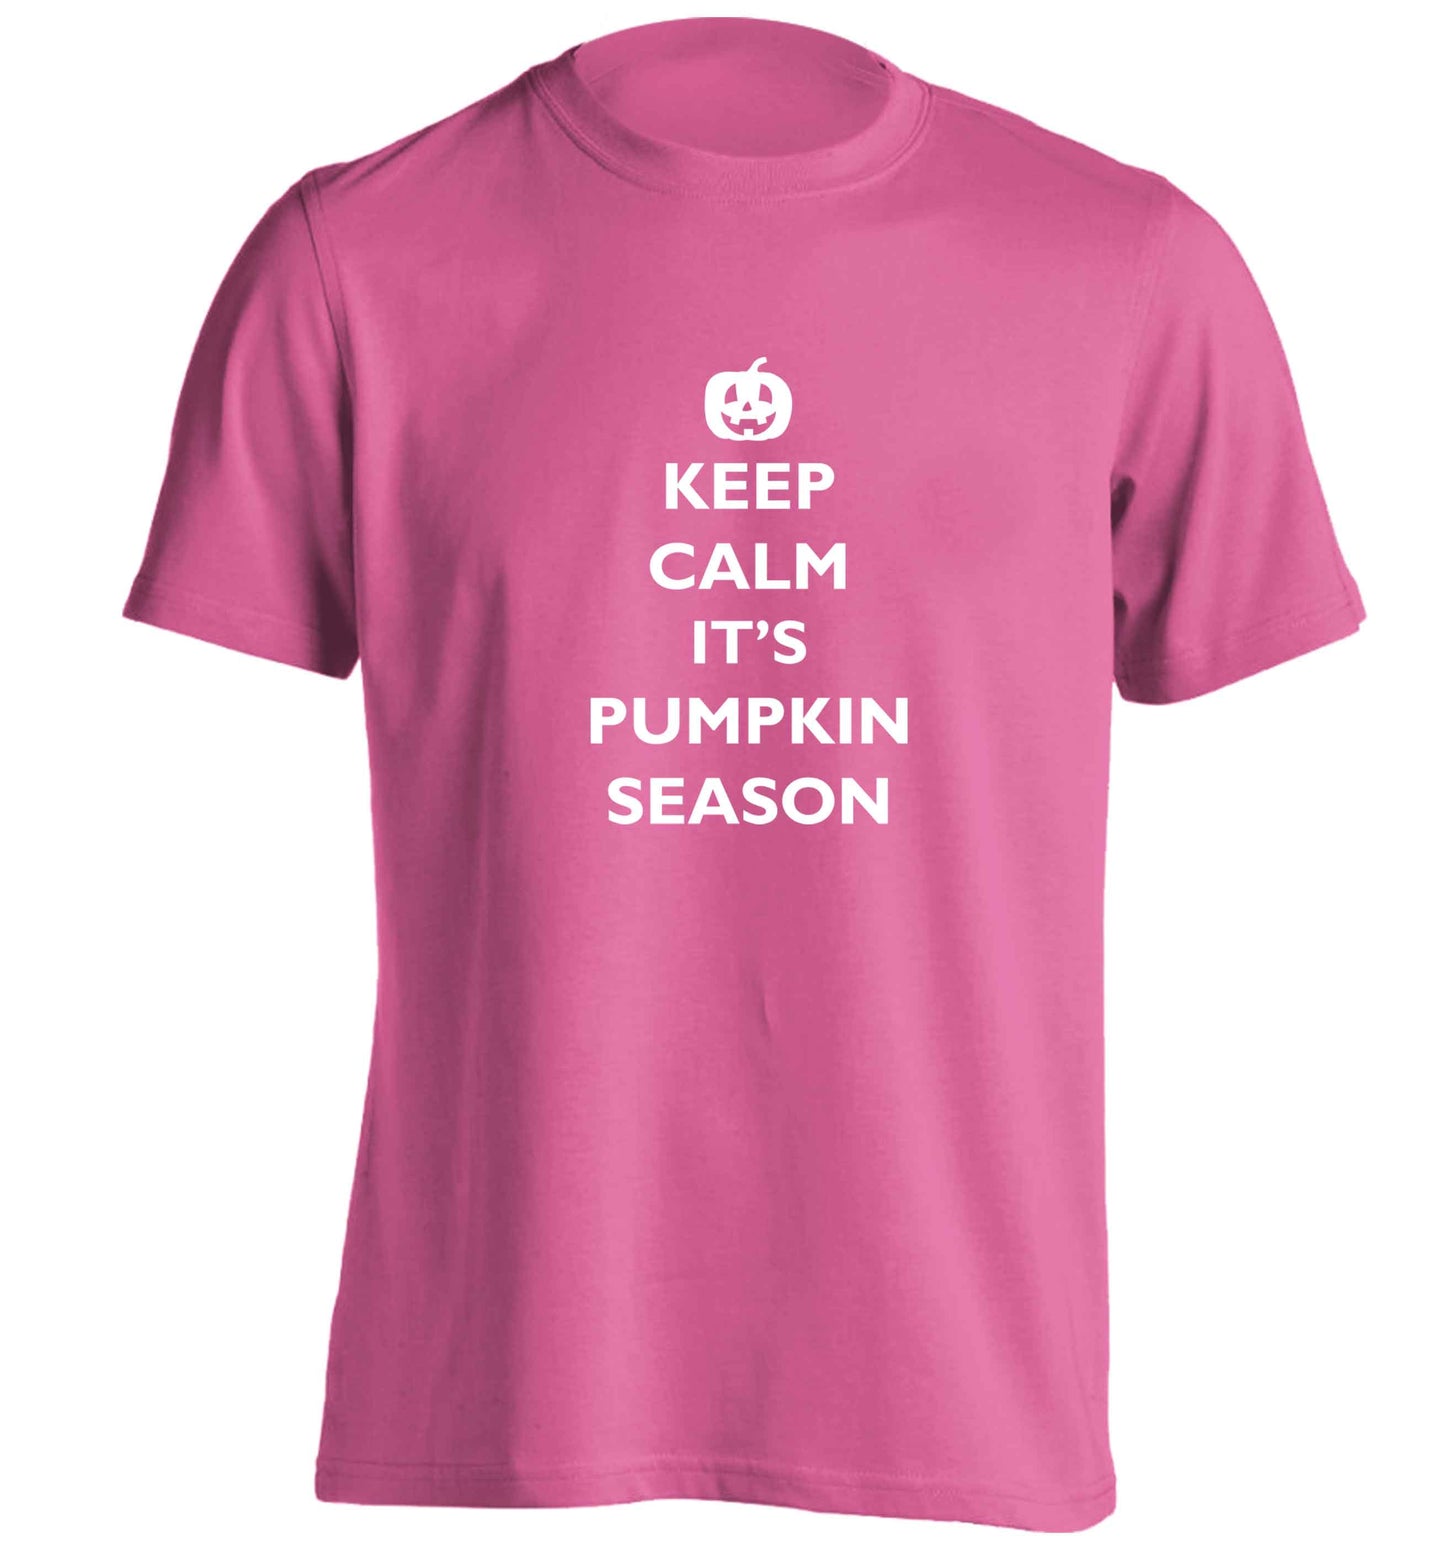 Calm Pumpkin Season adults unisex pink Tshirt 2XL